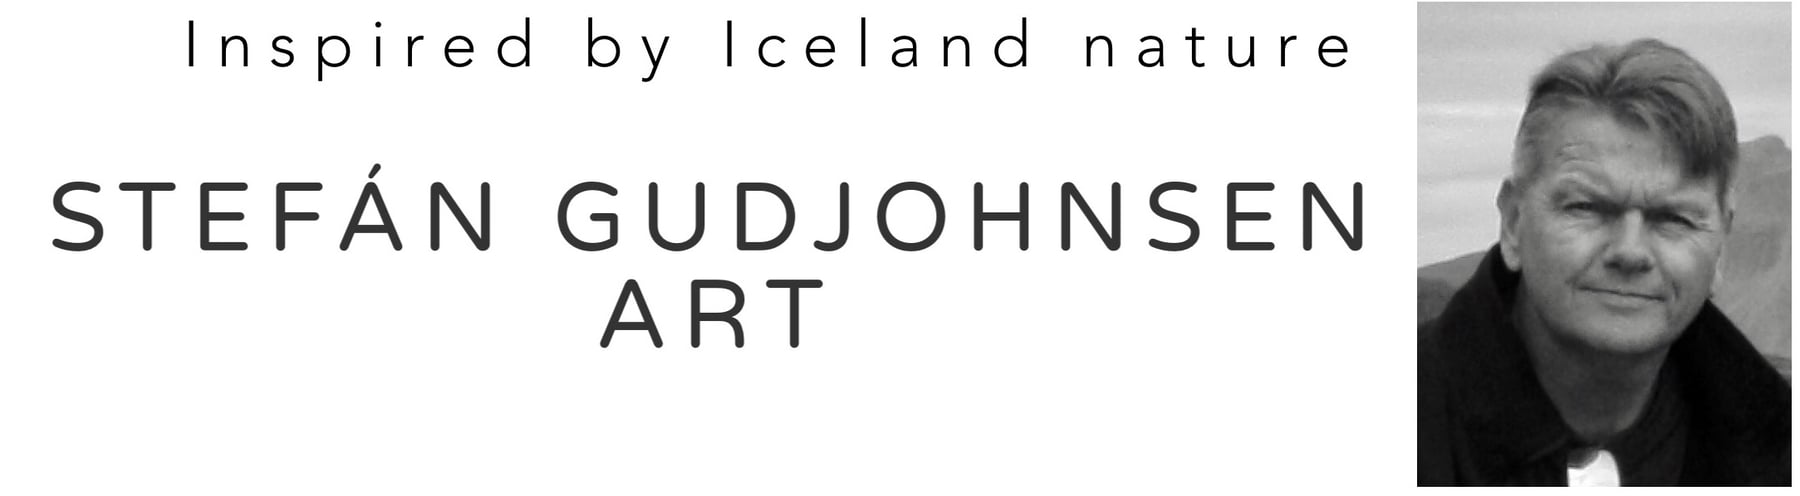 Stefán Gudjohnsen art - inspired by Iceland nature